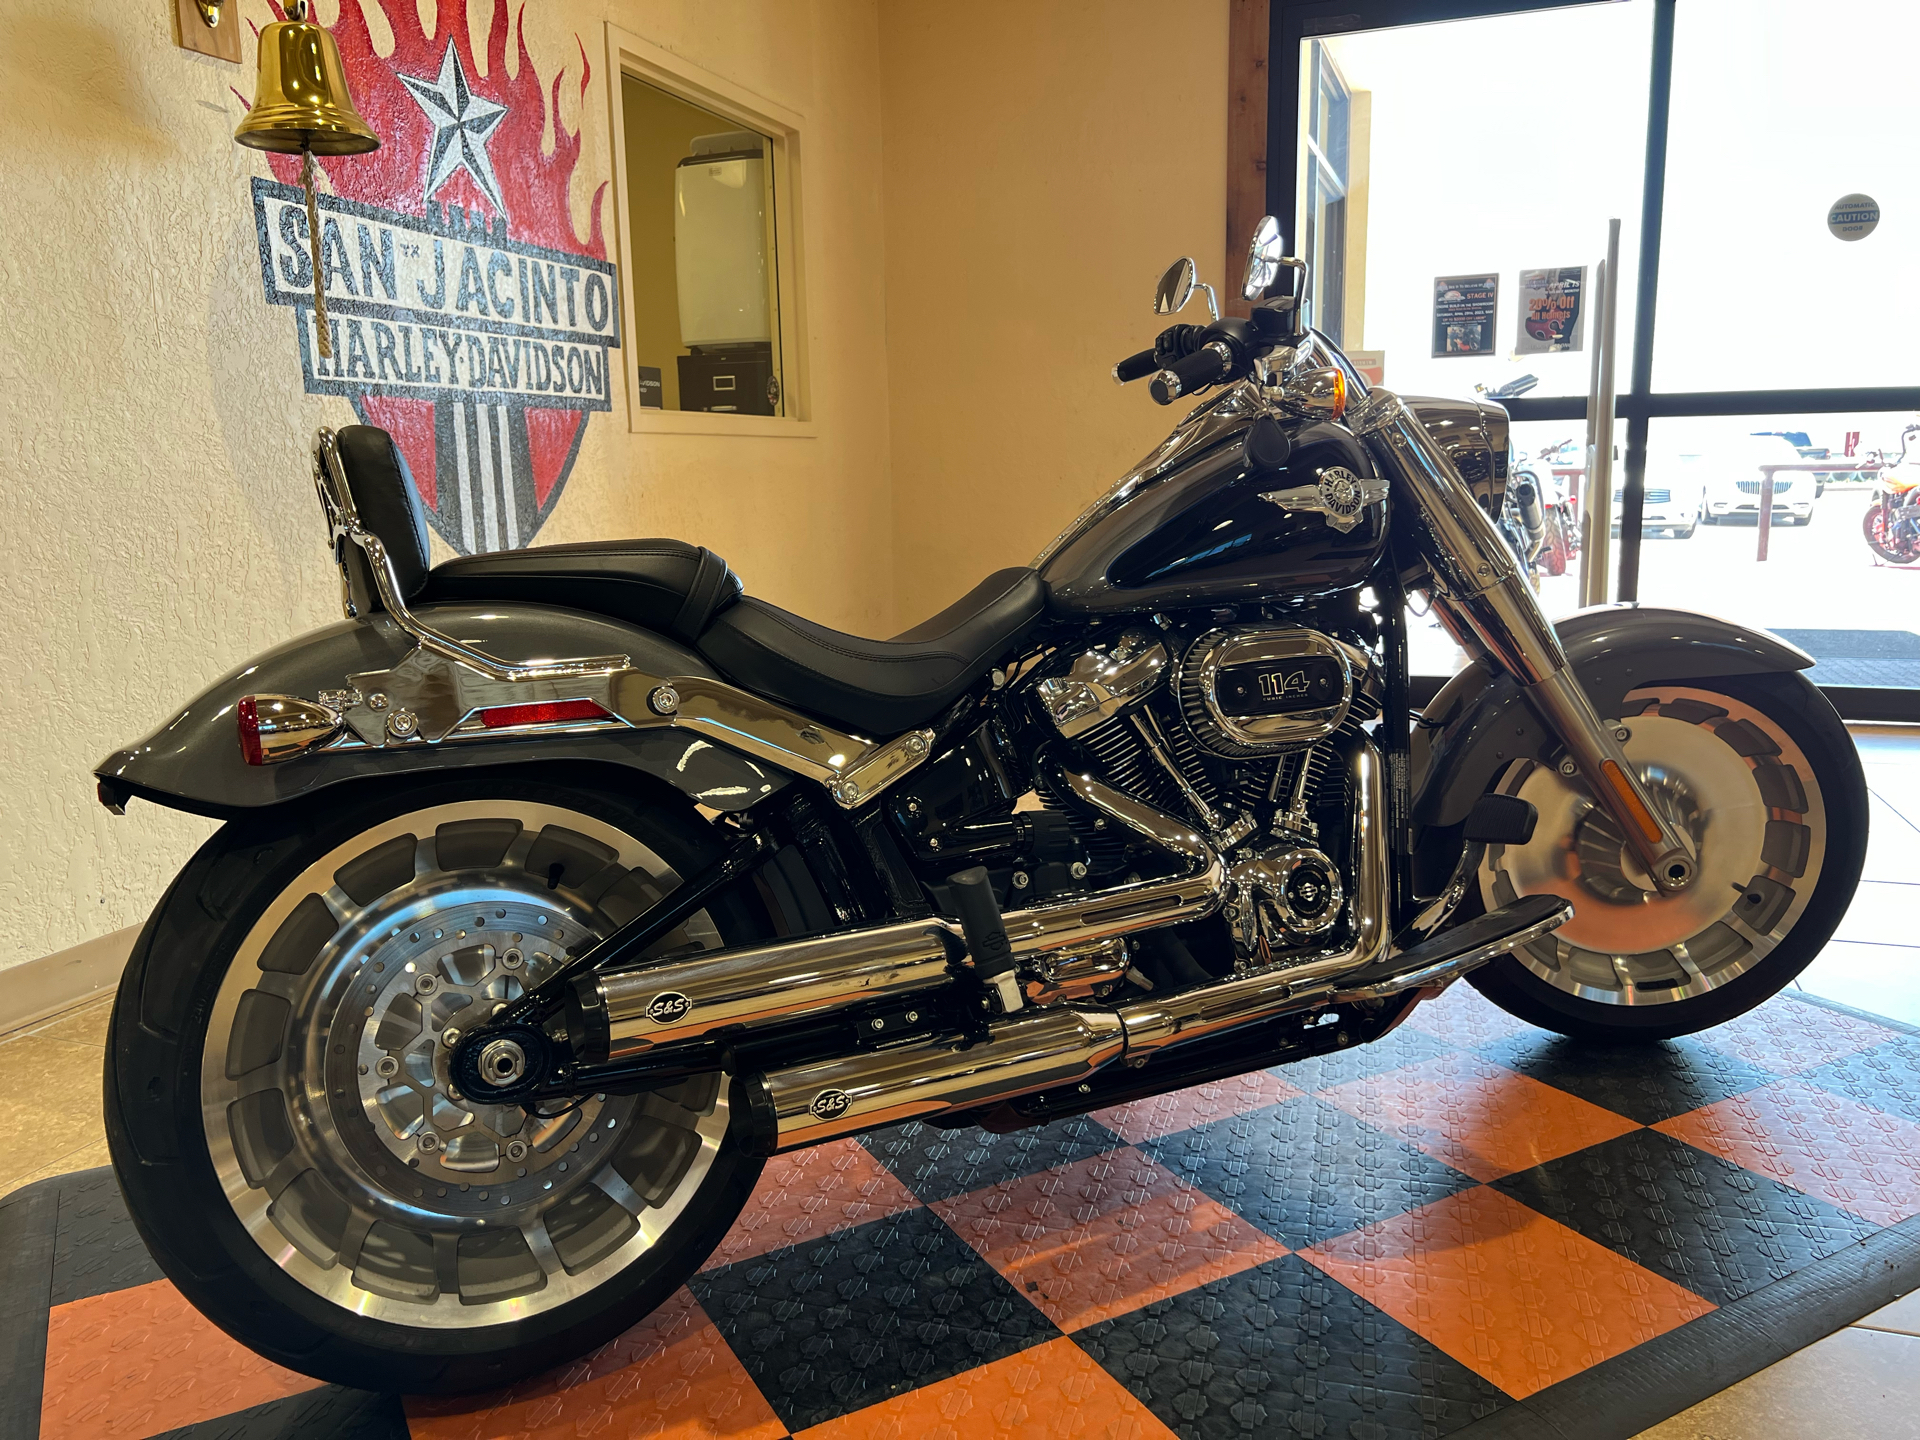 2021 Harley-Davidson Fat Boy® 114 in Pasadena, Texas - Photo 3